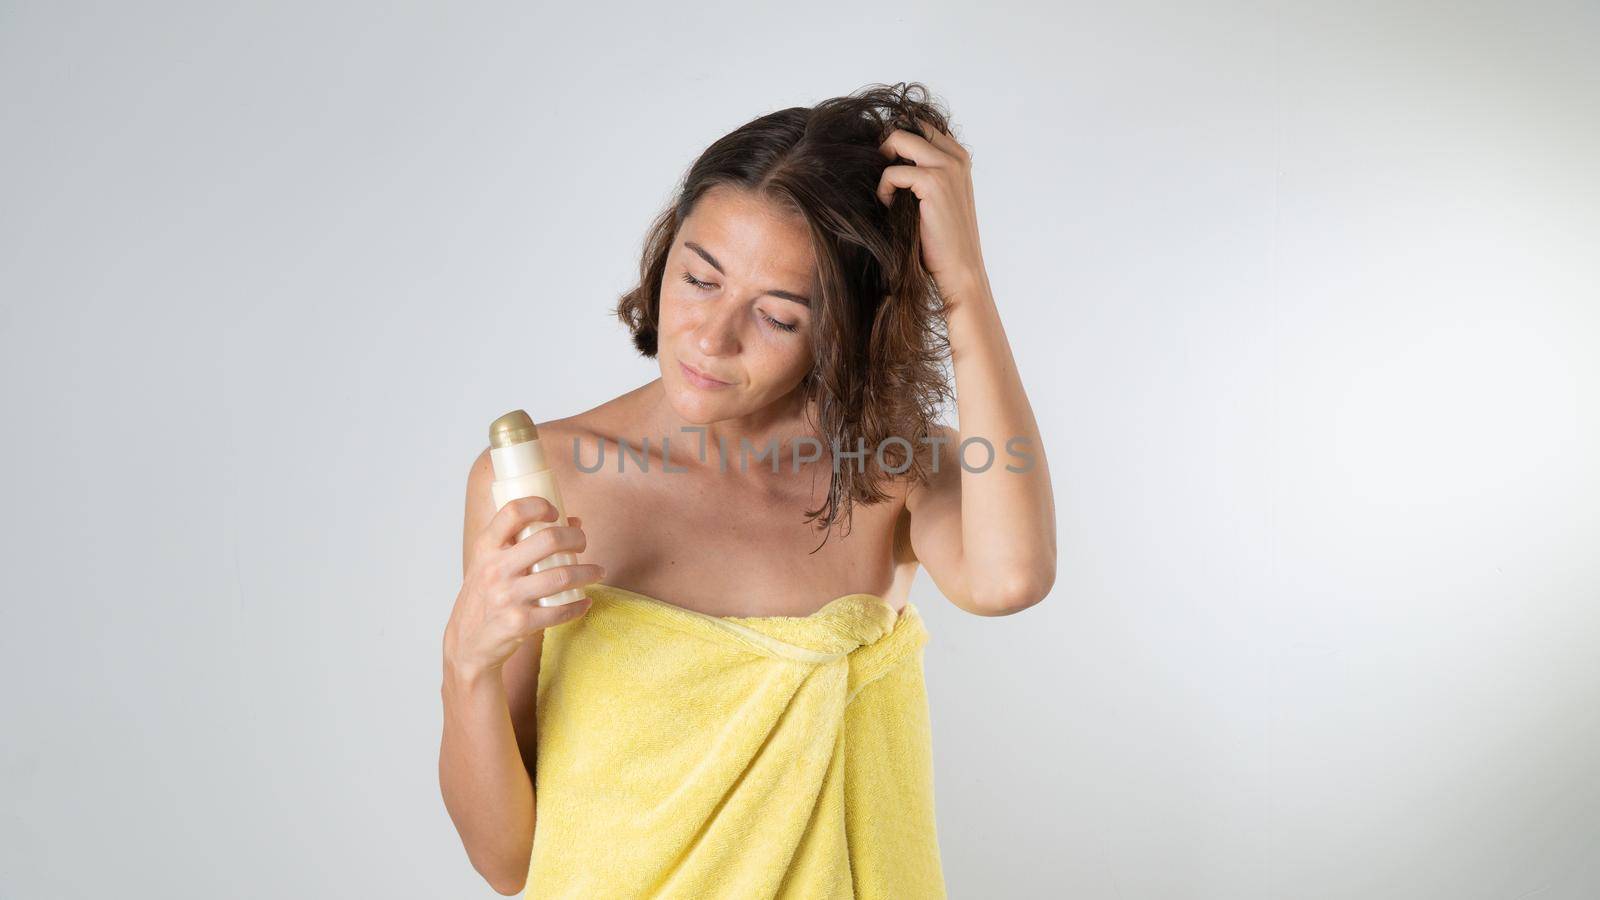 A woman applies serum balm to hair after a shower. High quality photo